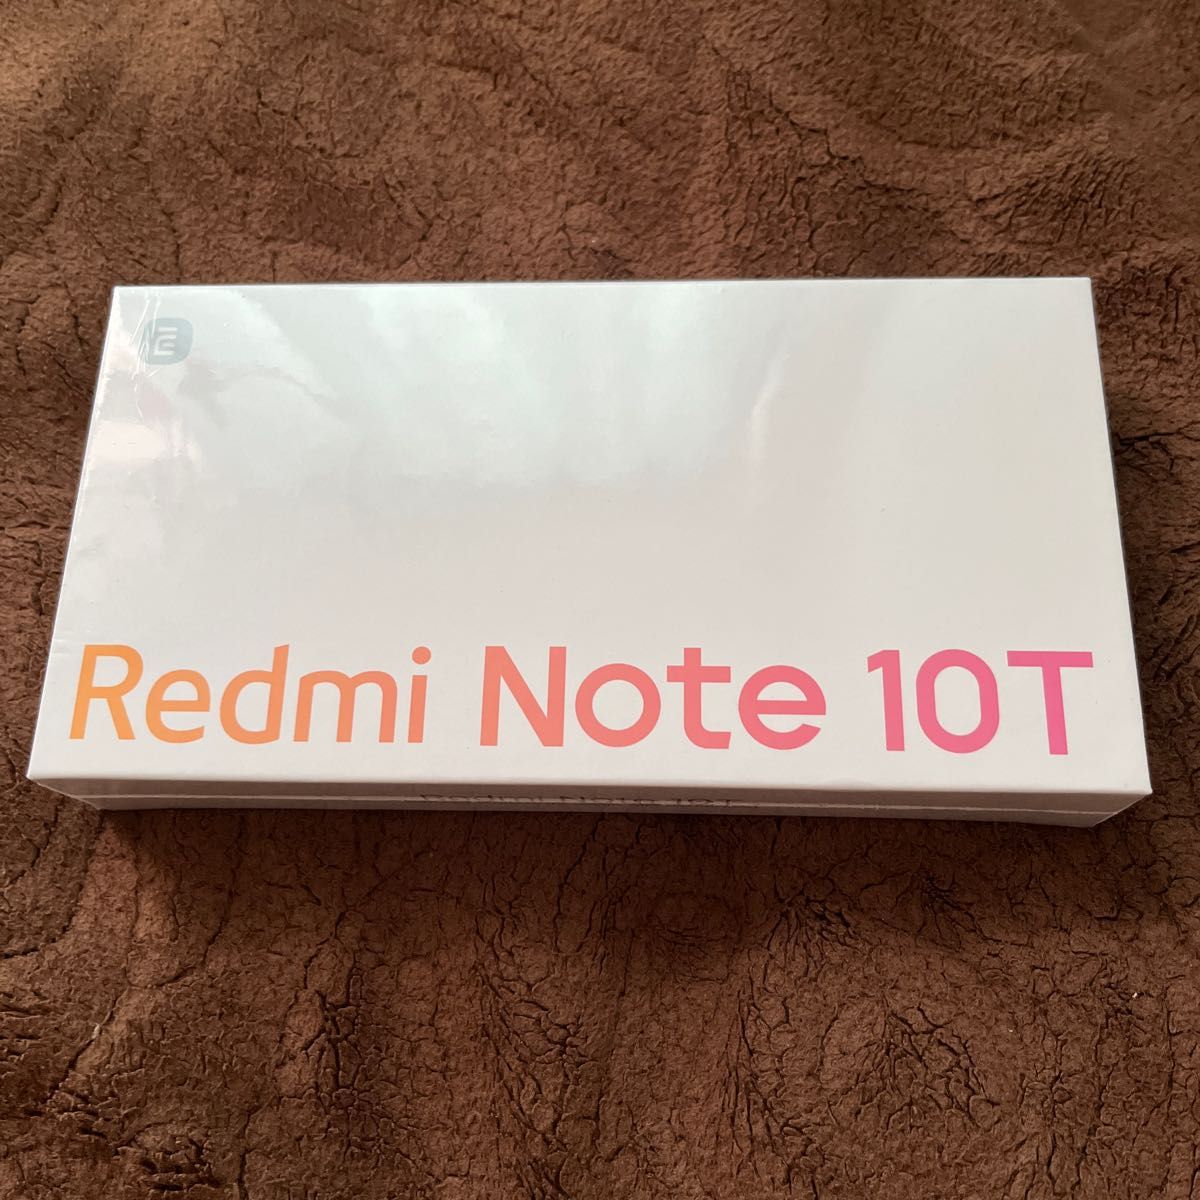 Redmi+Note+10Tの新品・未使用品・中古品｜PayPayフリマ